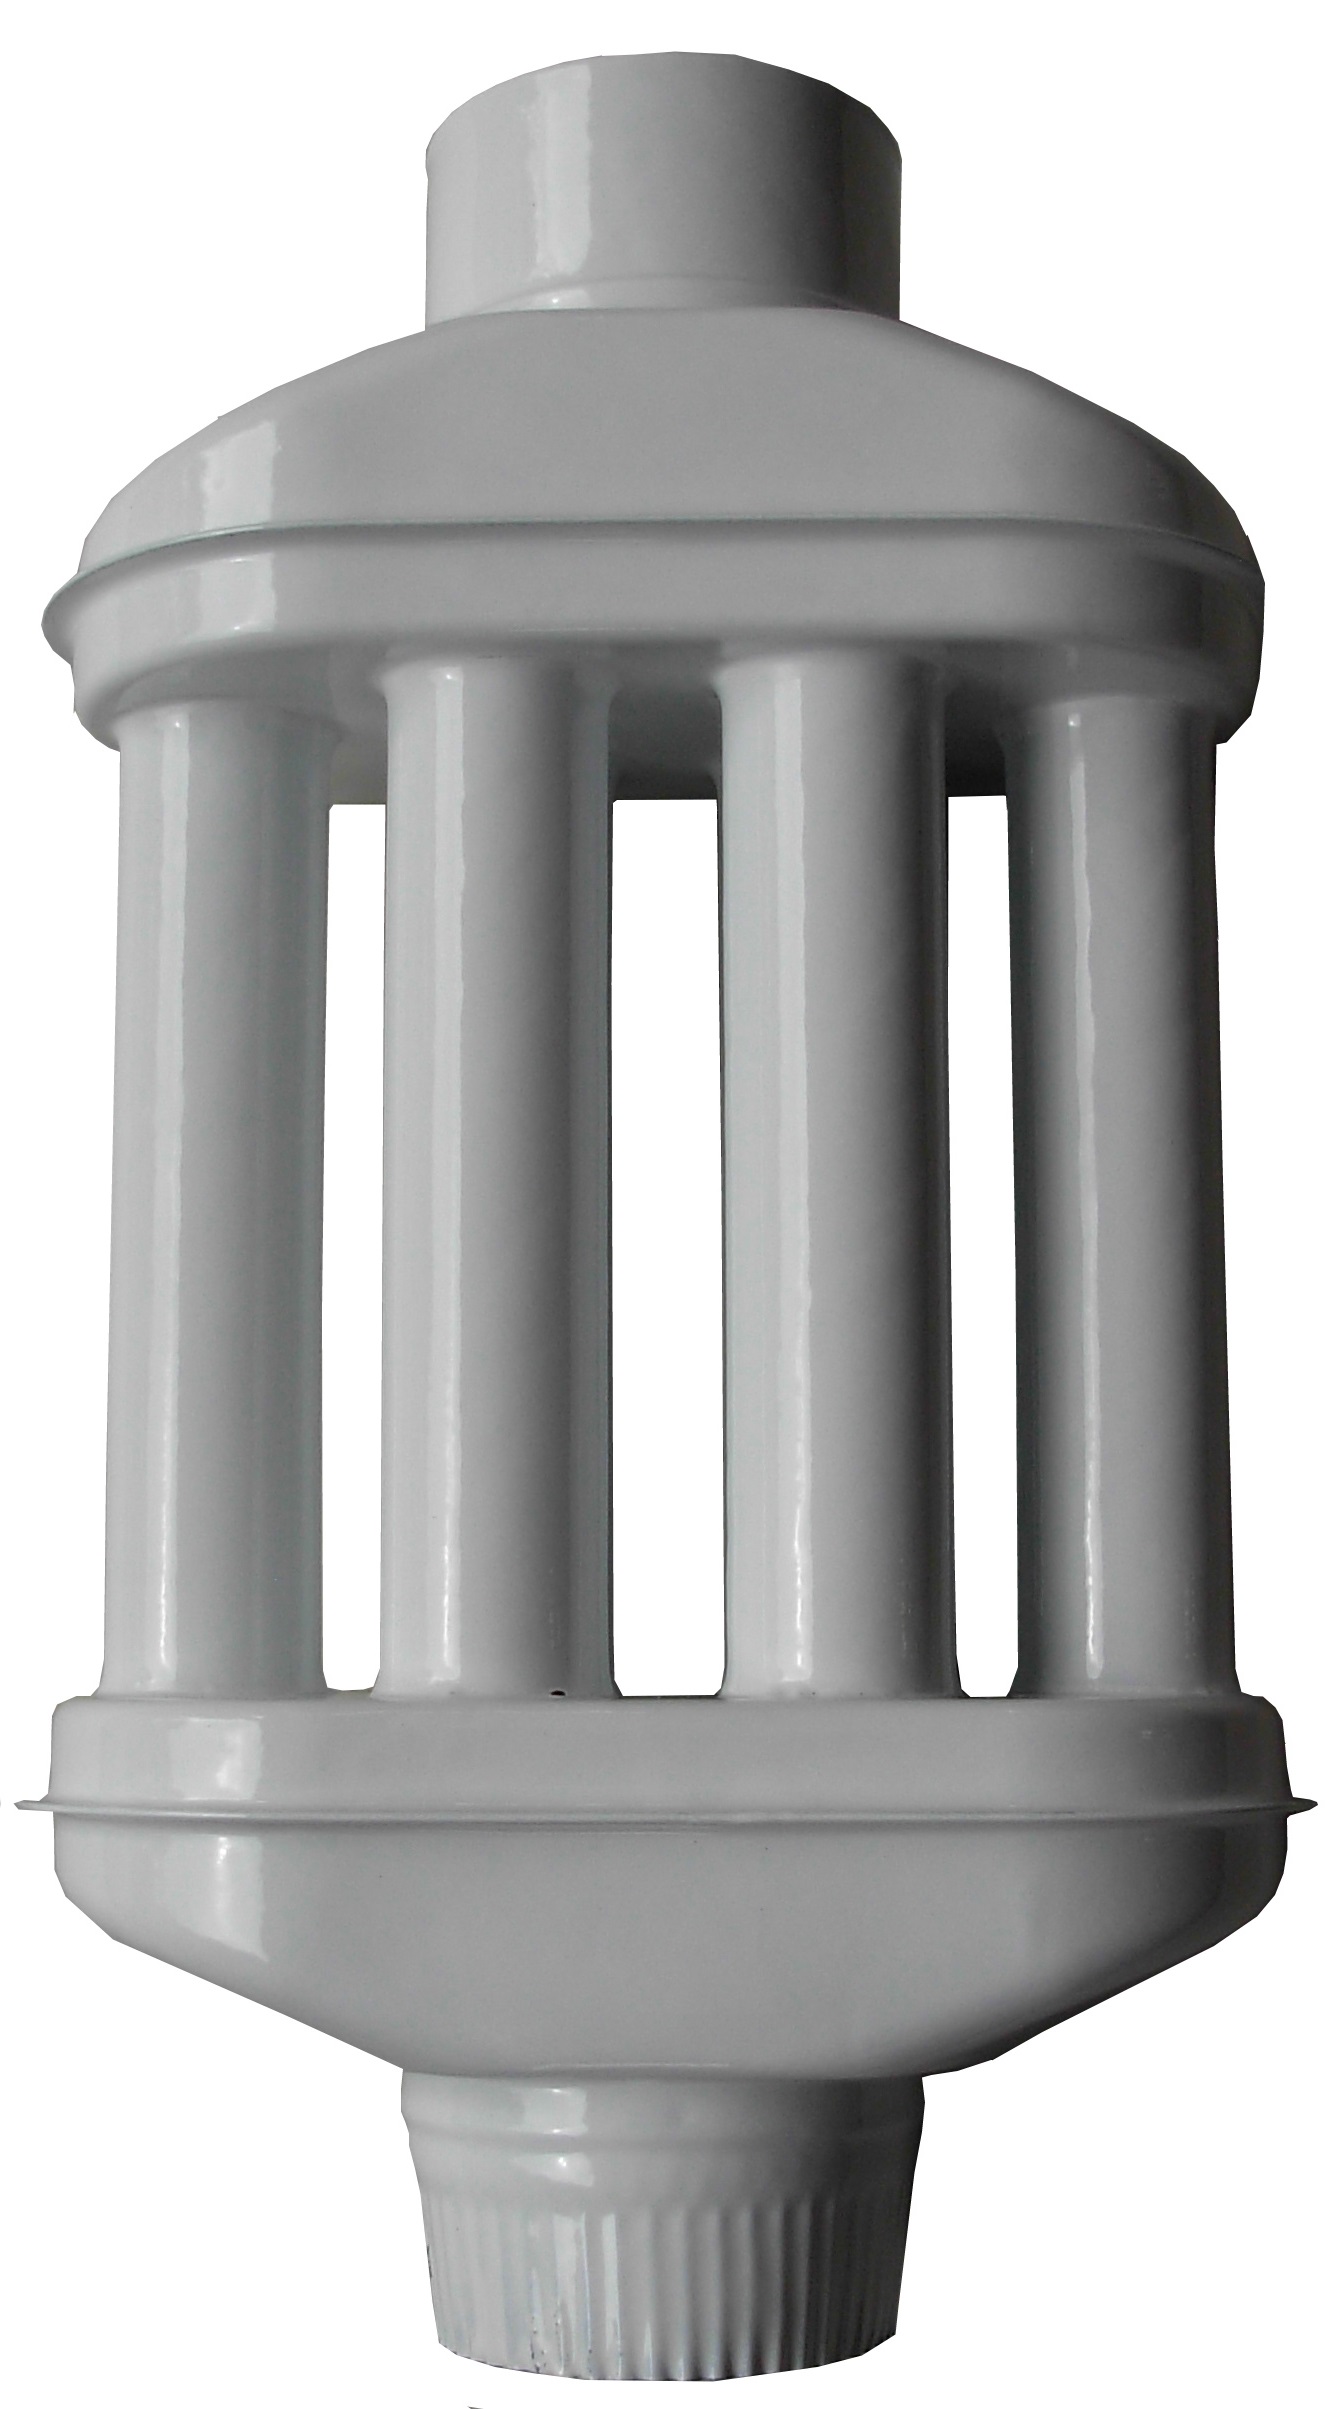  Recuperator(tambur) de căldură 550 mm diametru: 120 mm